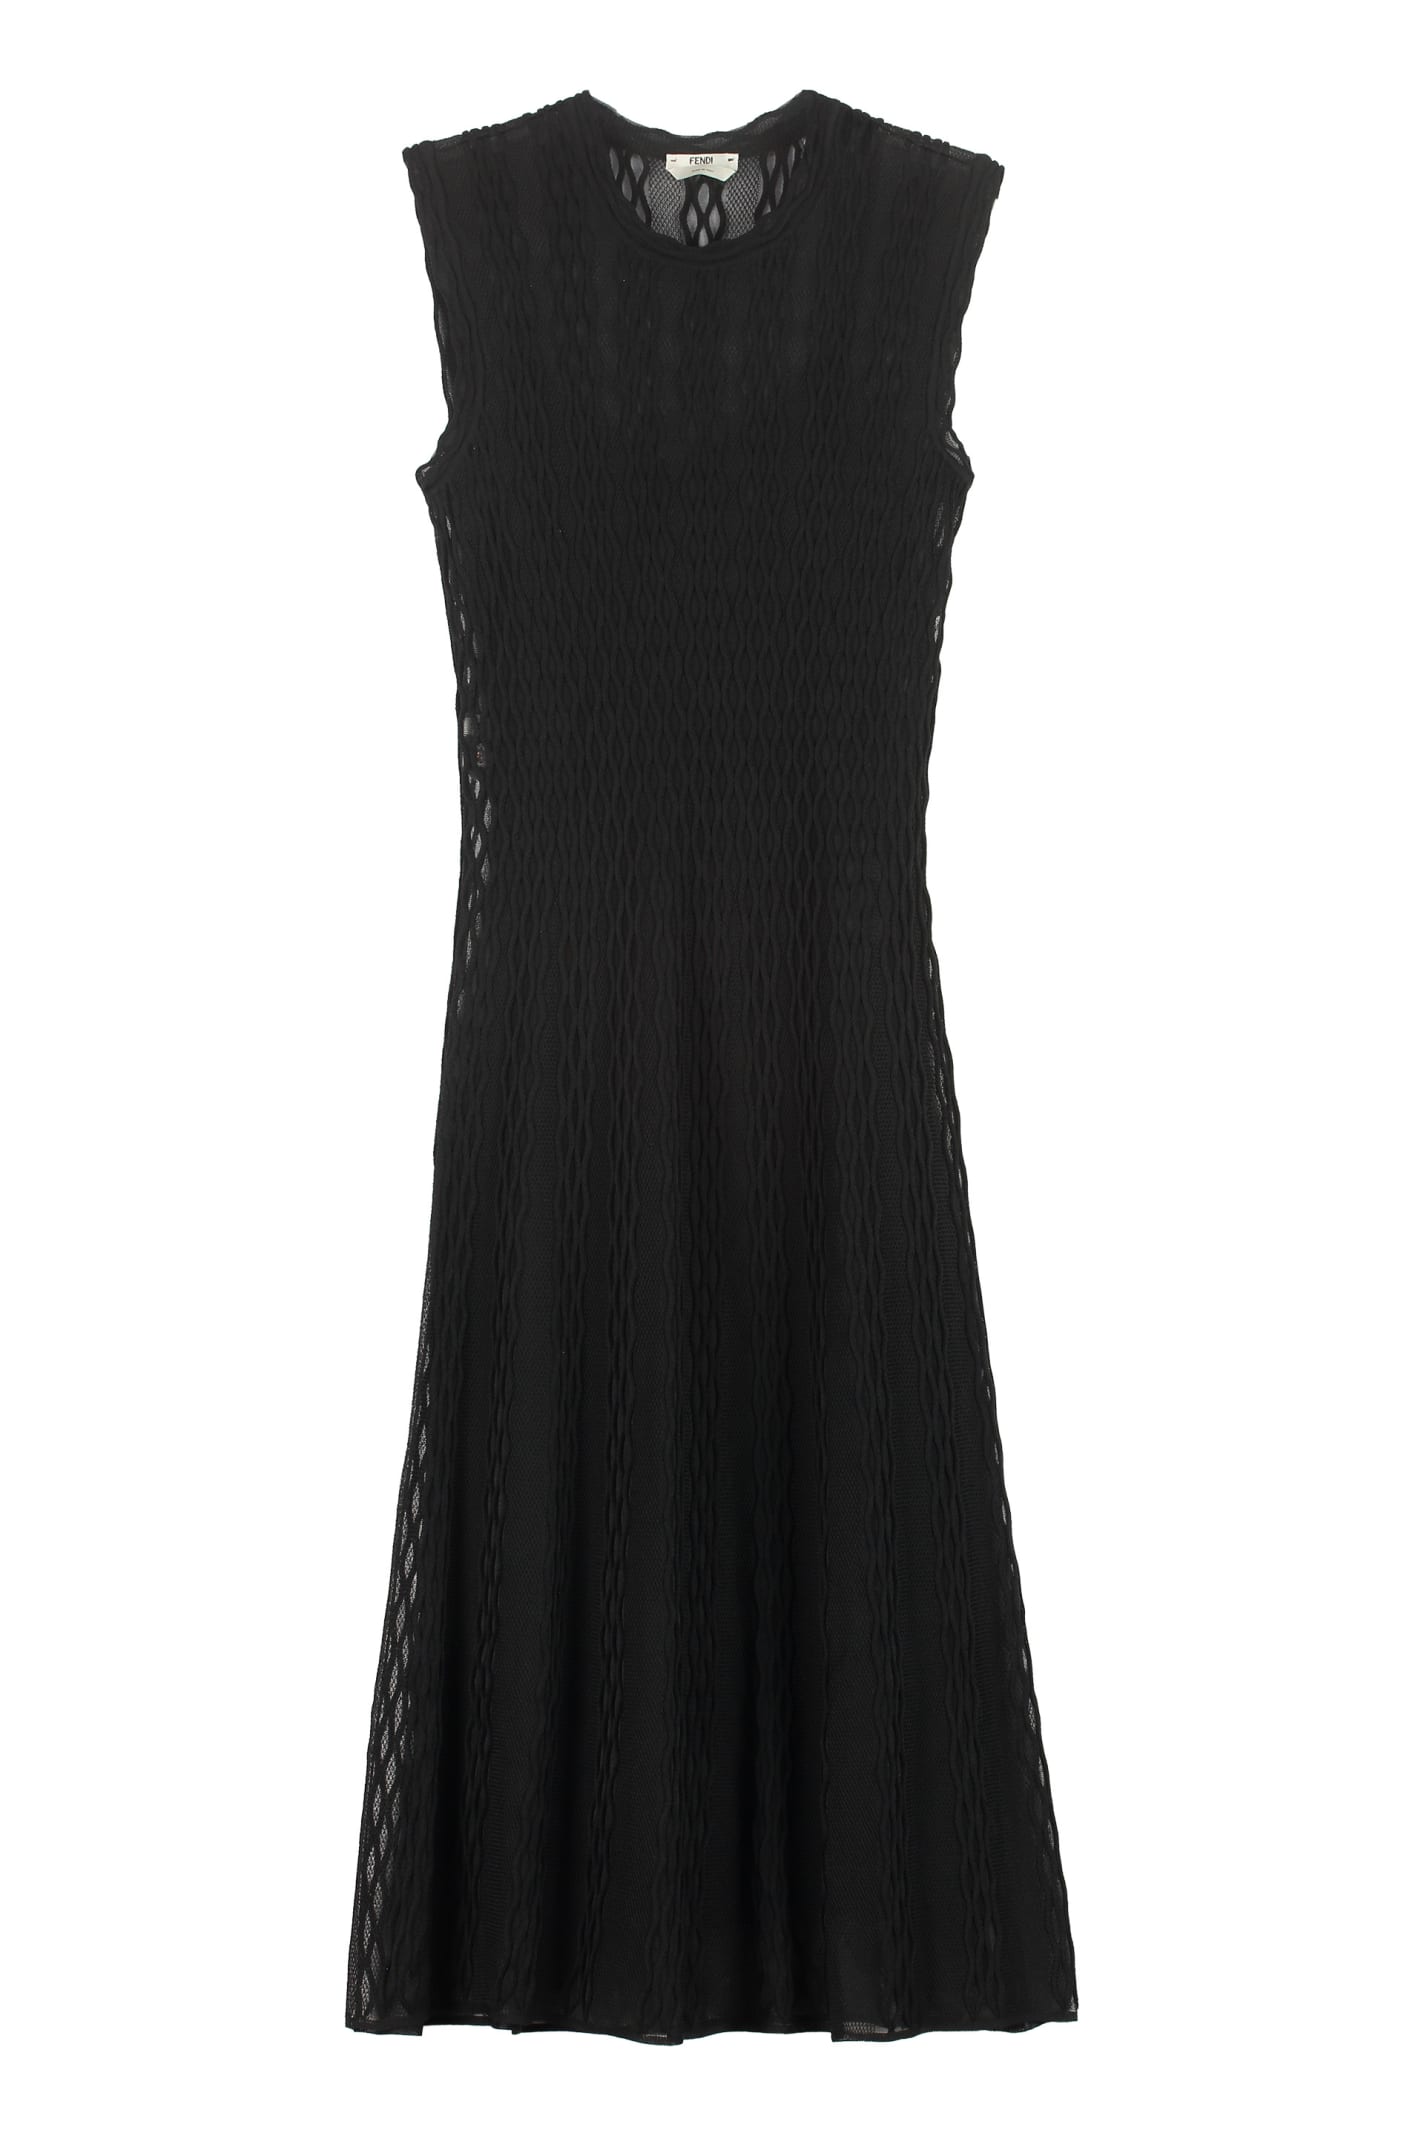 Save 19% Fendi Synthetic Midi Viscose Dress in Black Womens Dresses Fendi Dresses 